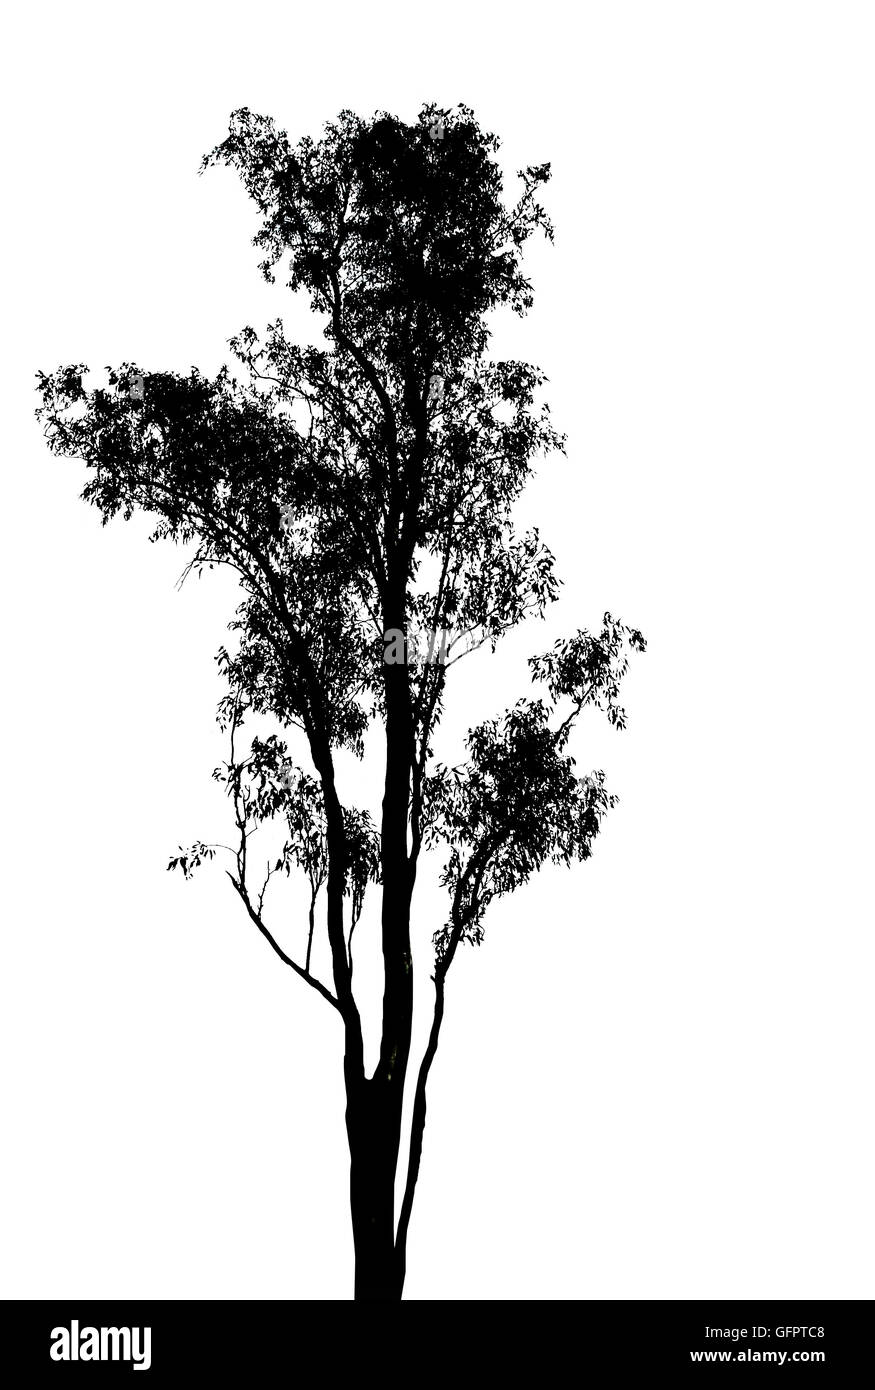 a single tree silhouette on white background Stock Photo